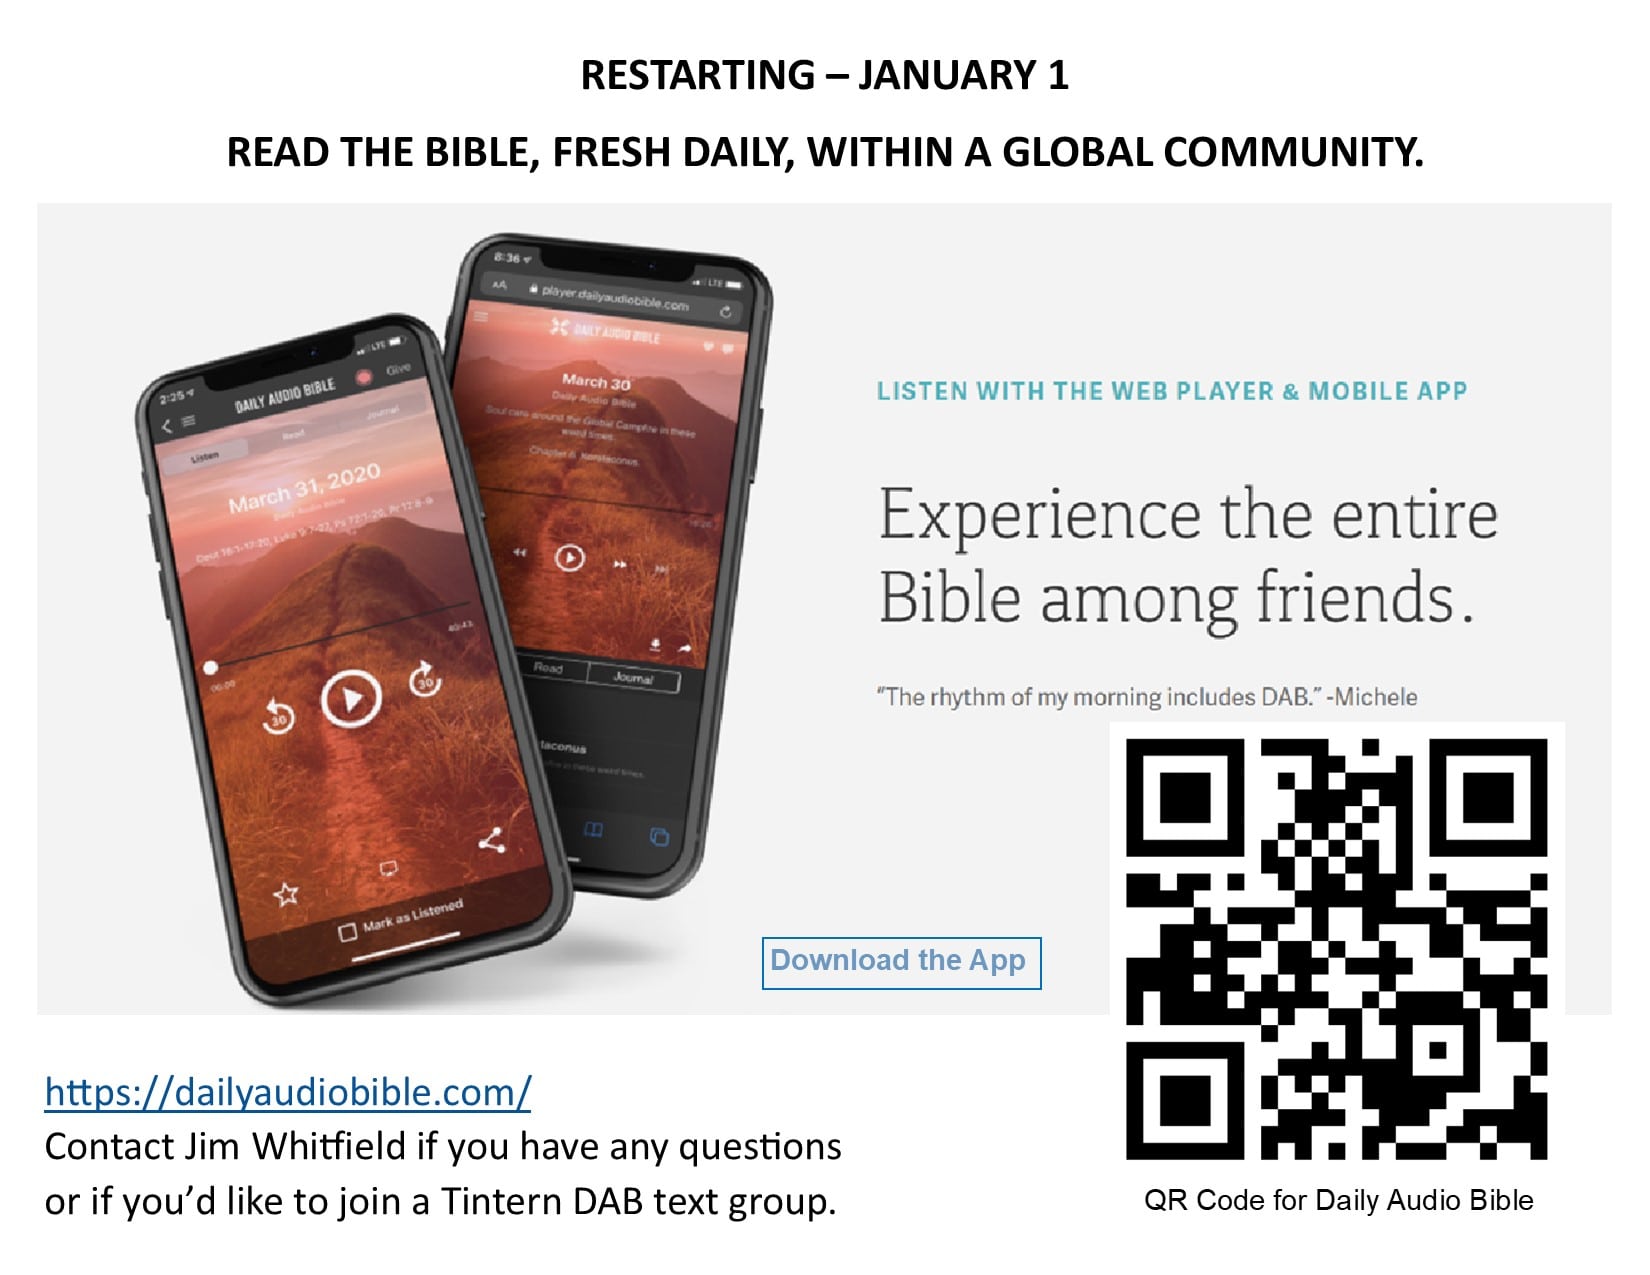 DAB Audio Bible Read Ad for Jim W for eBulletin-min.jpg